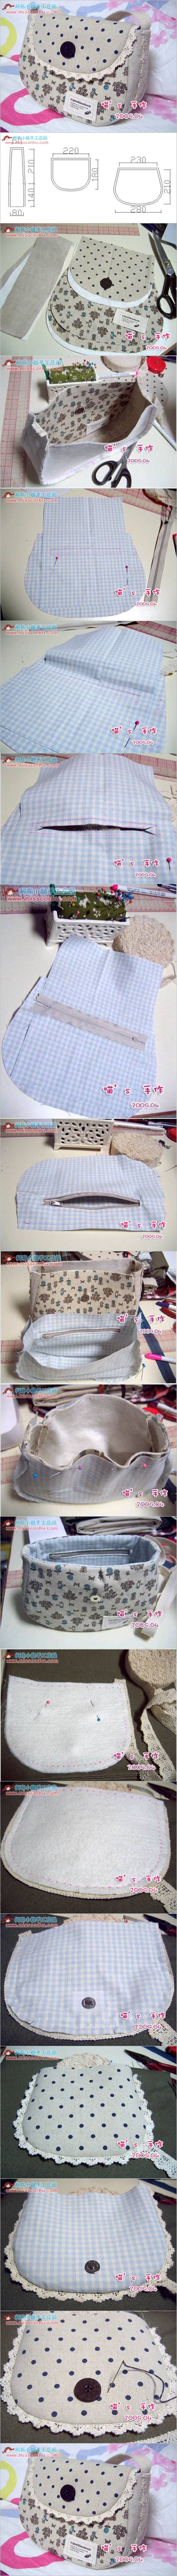 DIY How to Sew a Simple Summer Handbag